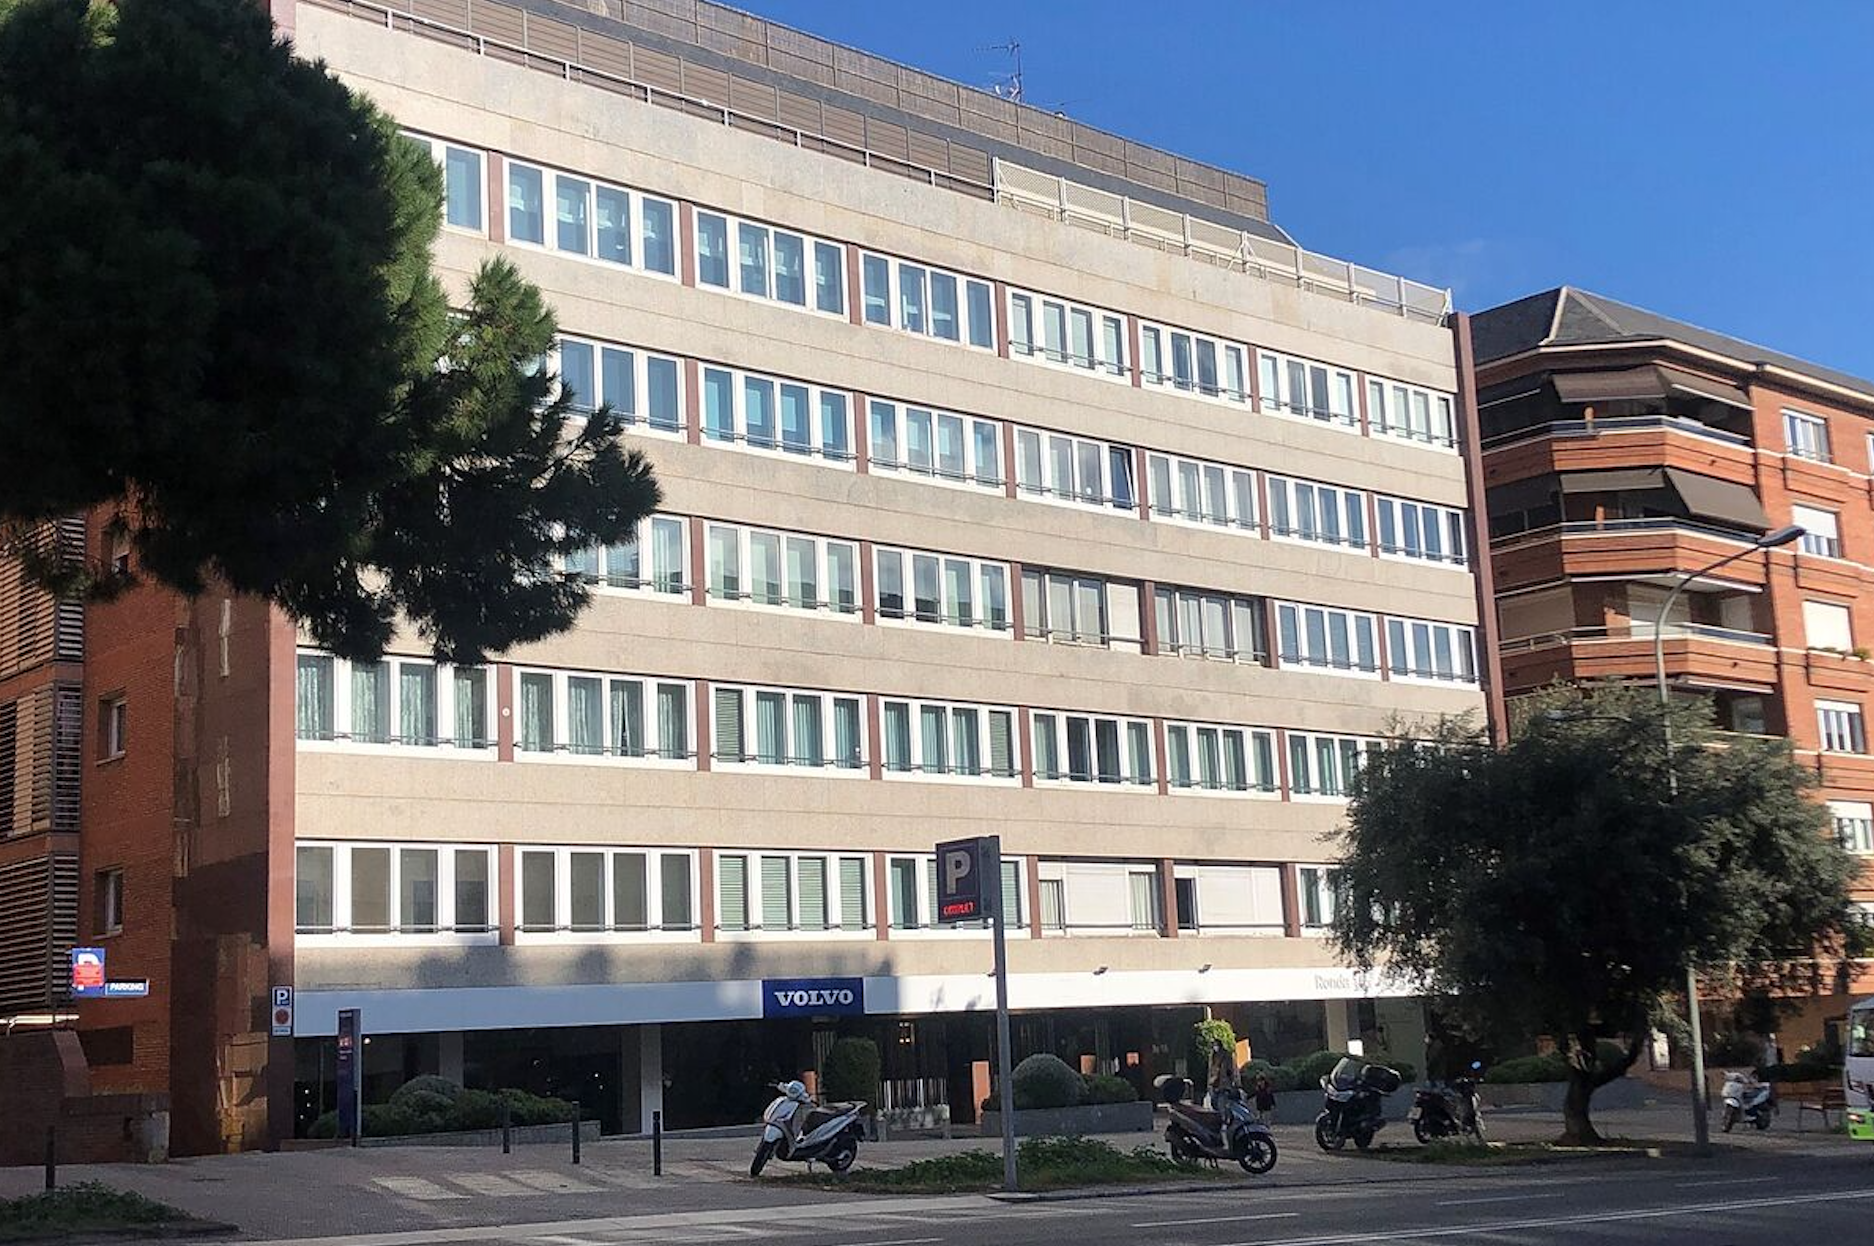 Renta Corporación acquires a residential building in Barcelona for €20M